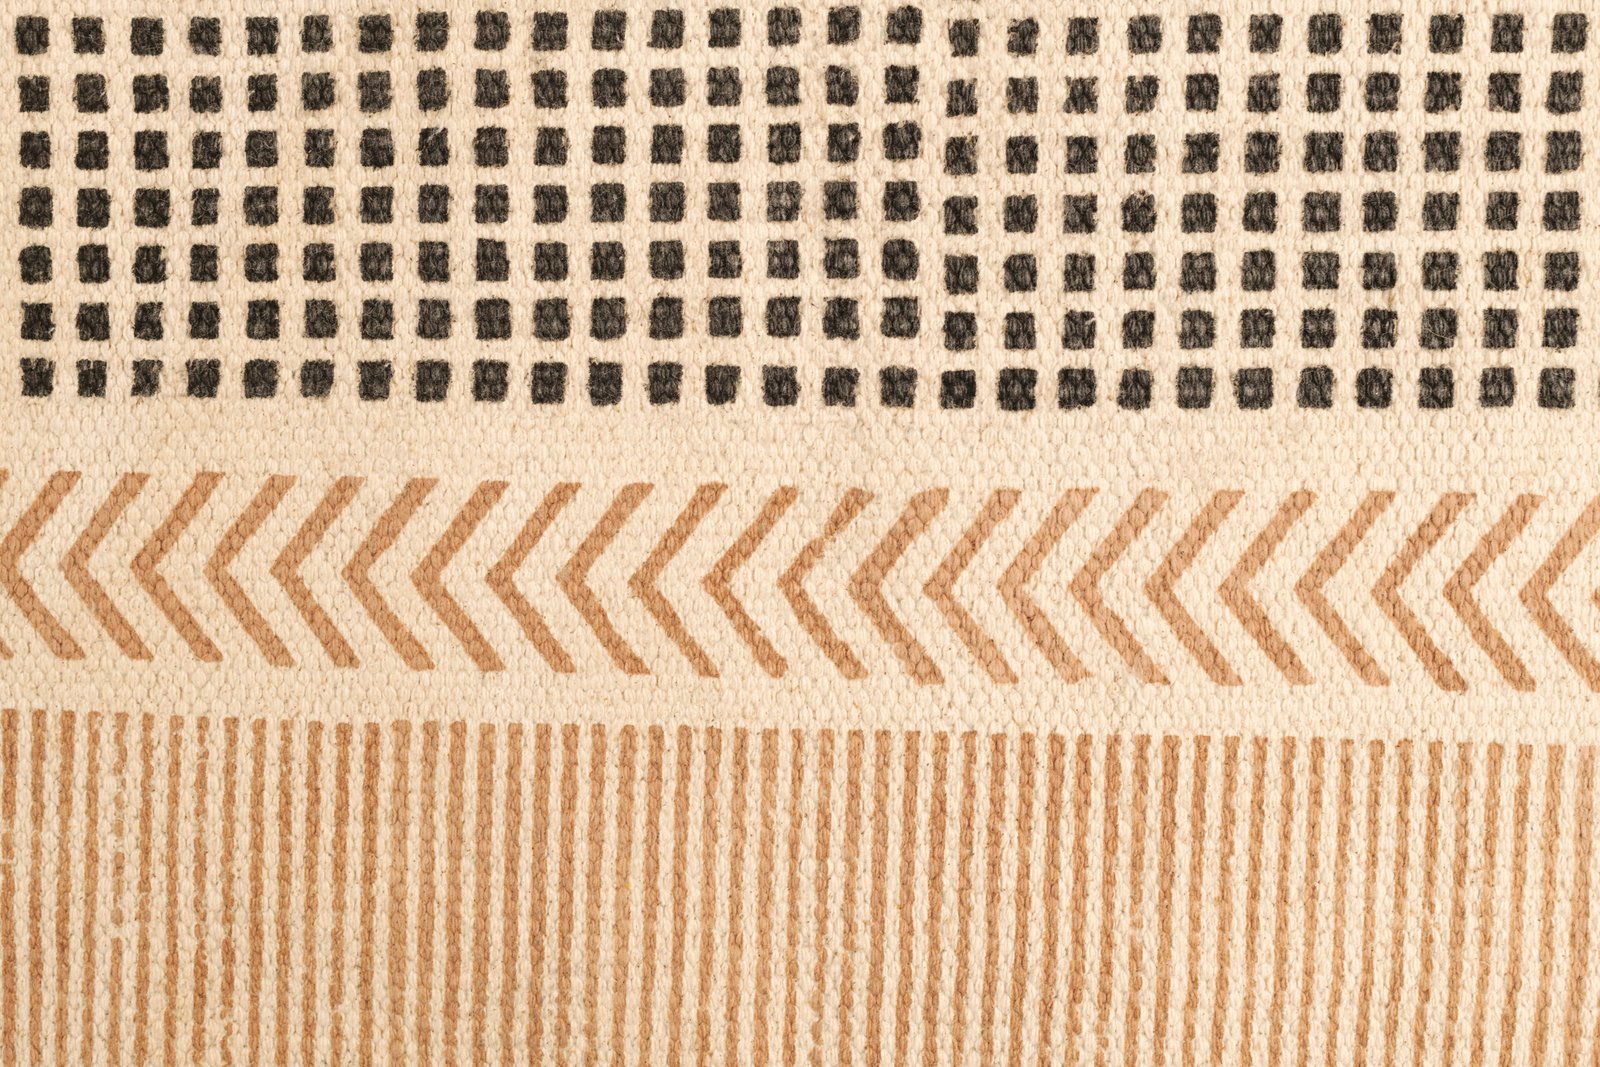 Aesthetic textile background, ethnic pattern.